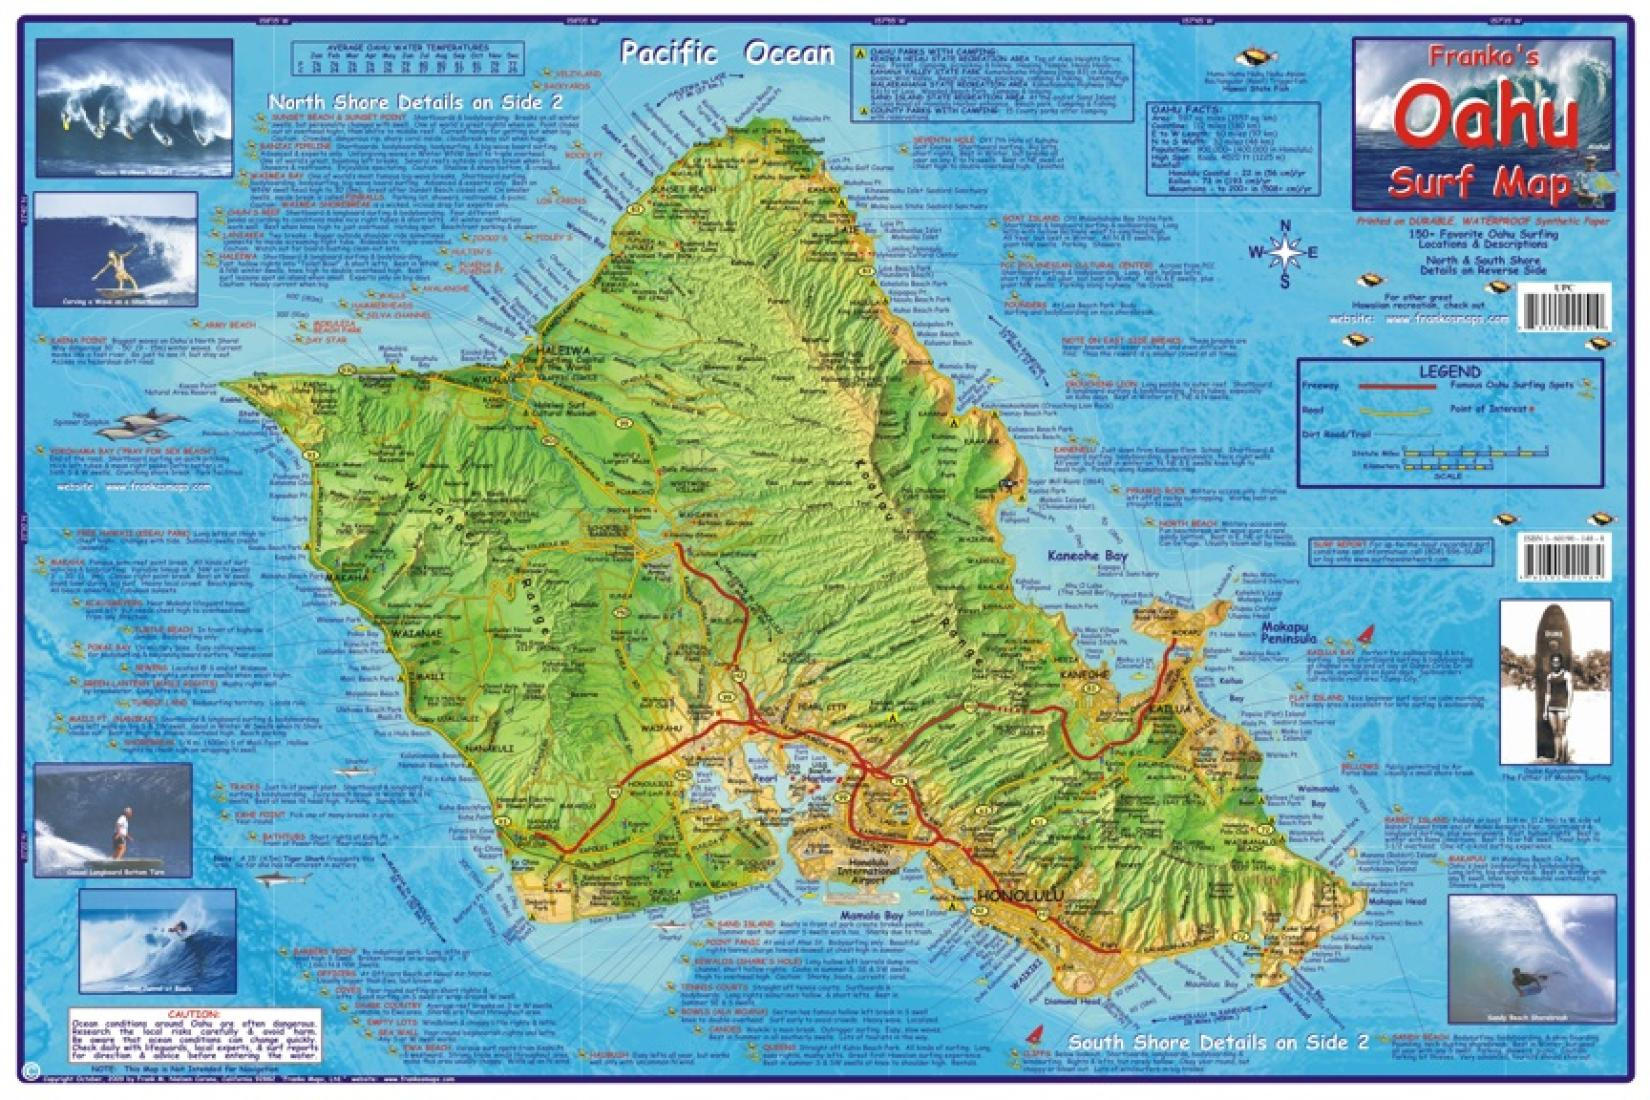 Oahu Hawaii 2009 Surf Map Laminated By Frankos Maps Ltd 